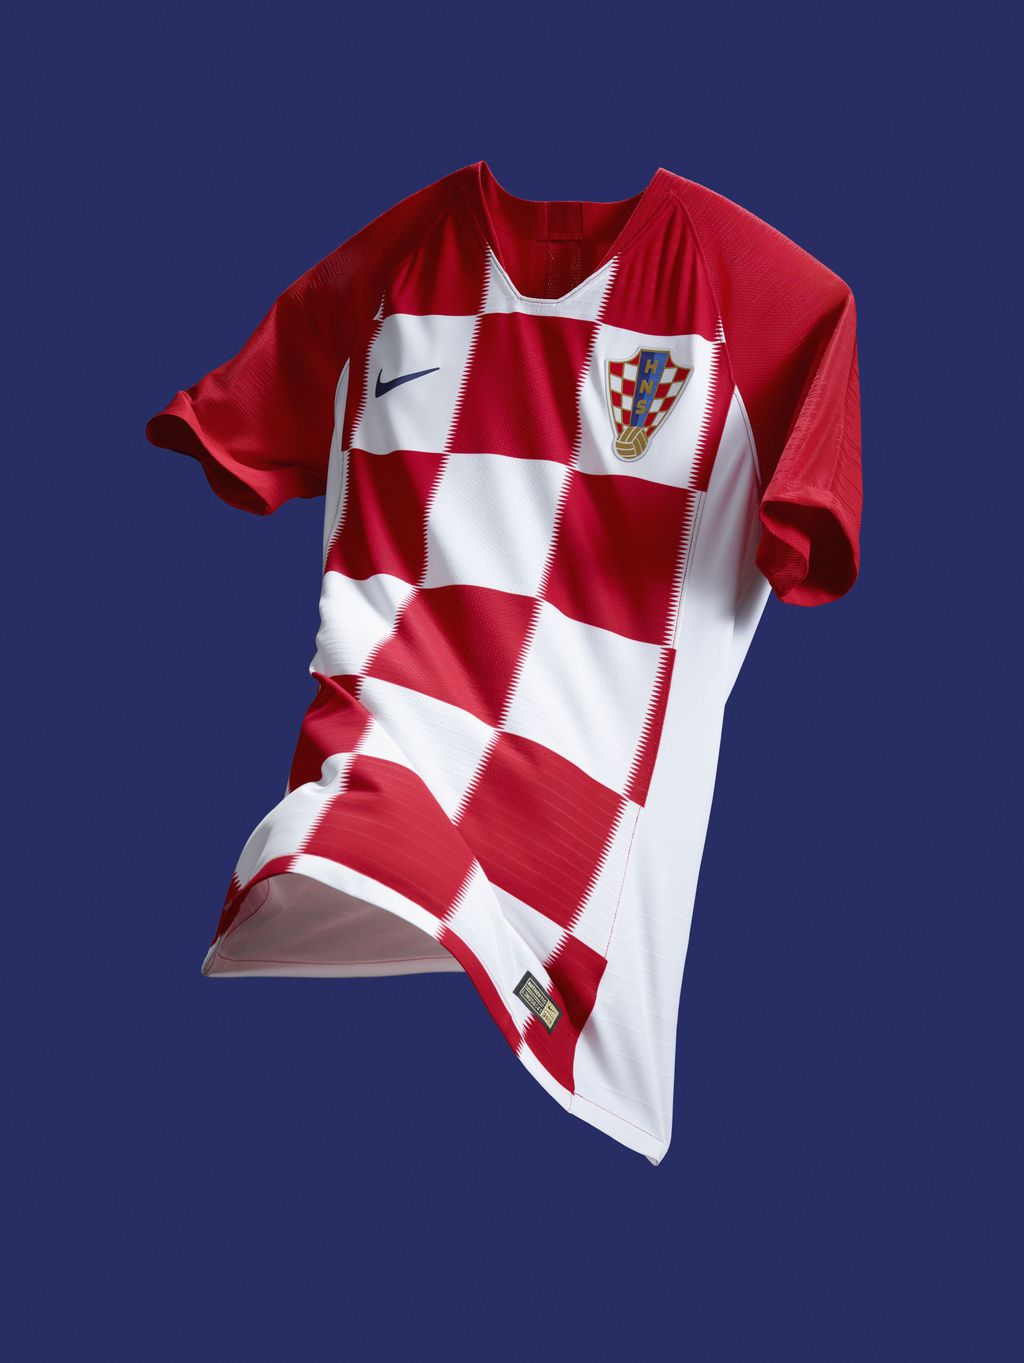 Novi dres hrvatske reprezentacije (Foto: HNS/Nike)